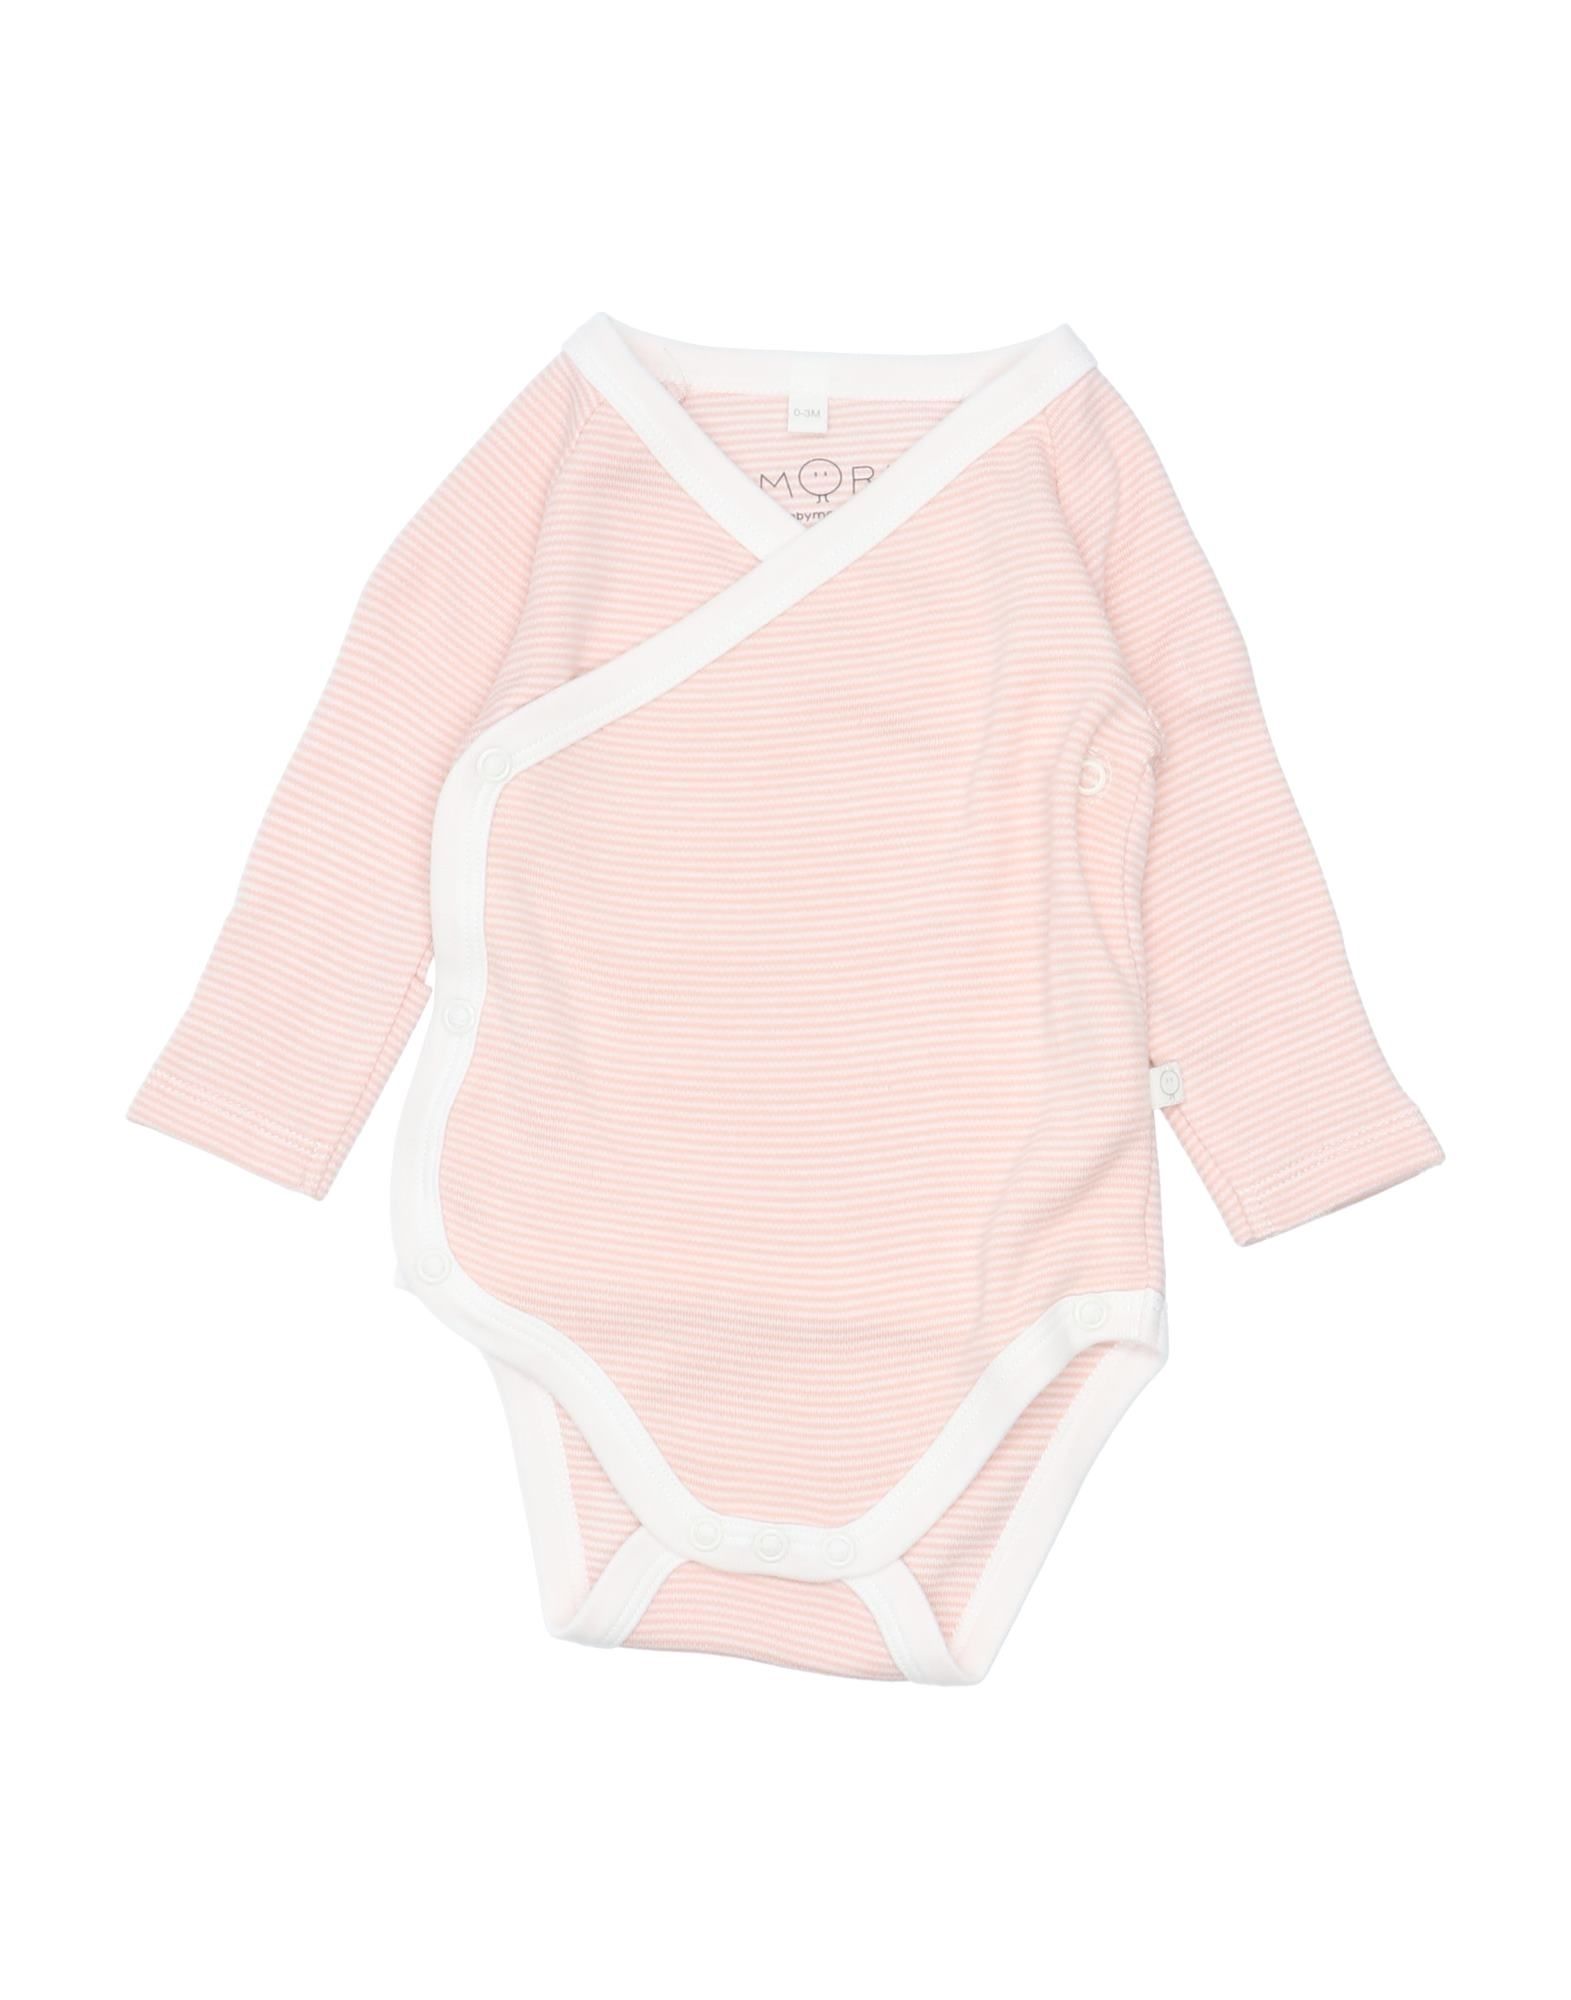 Mori Babies' Bodysuits In Pale Pink